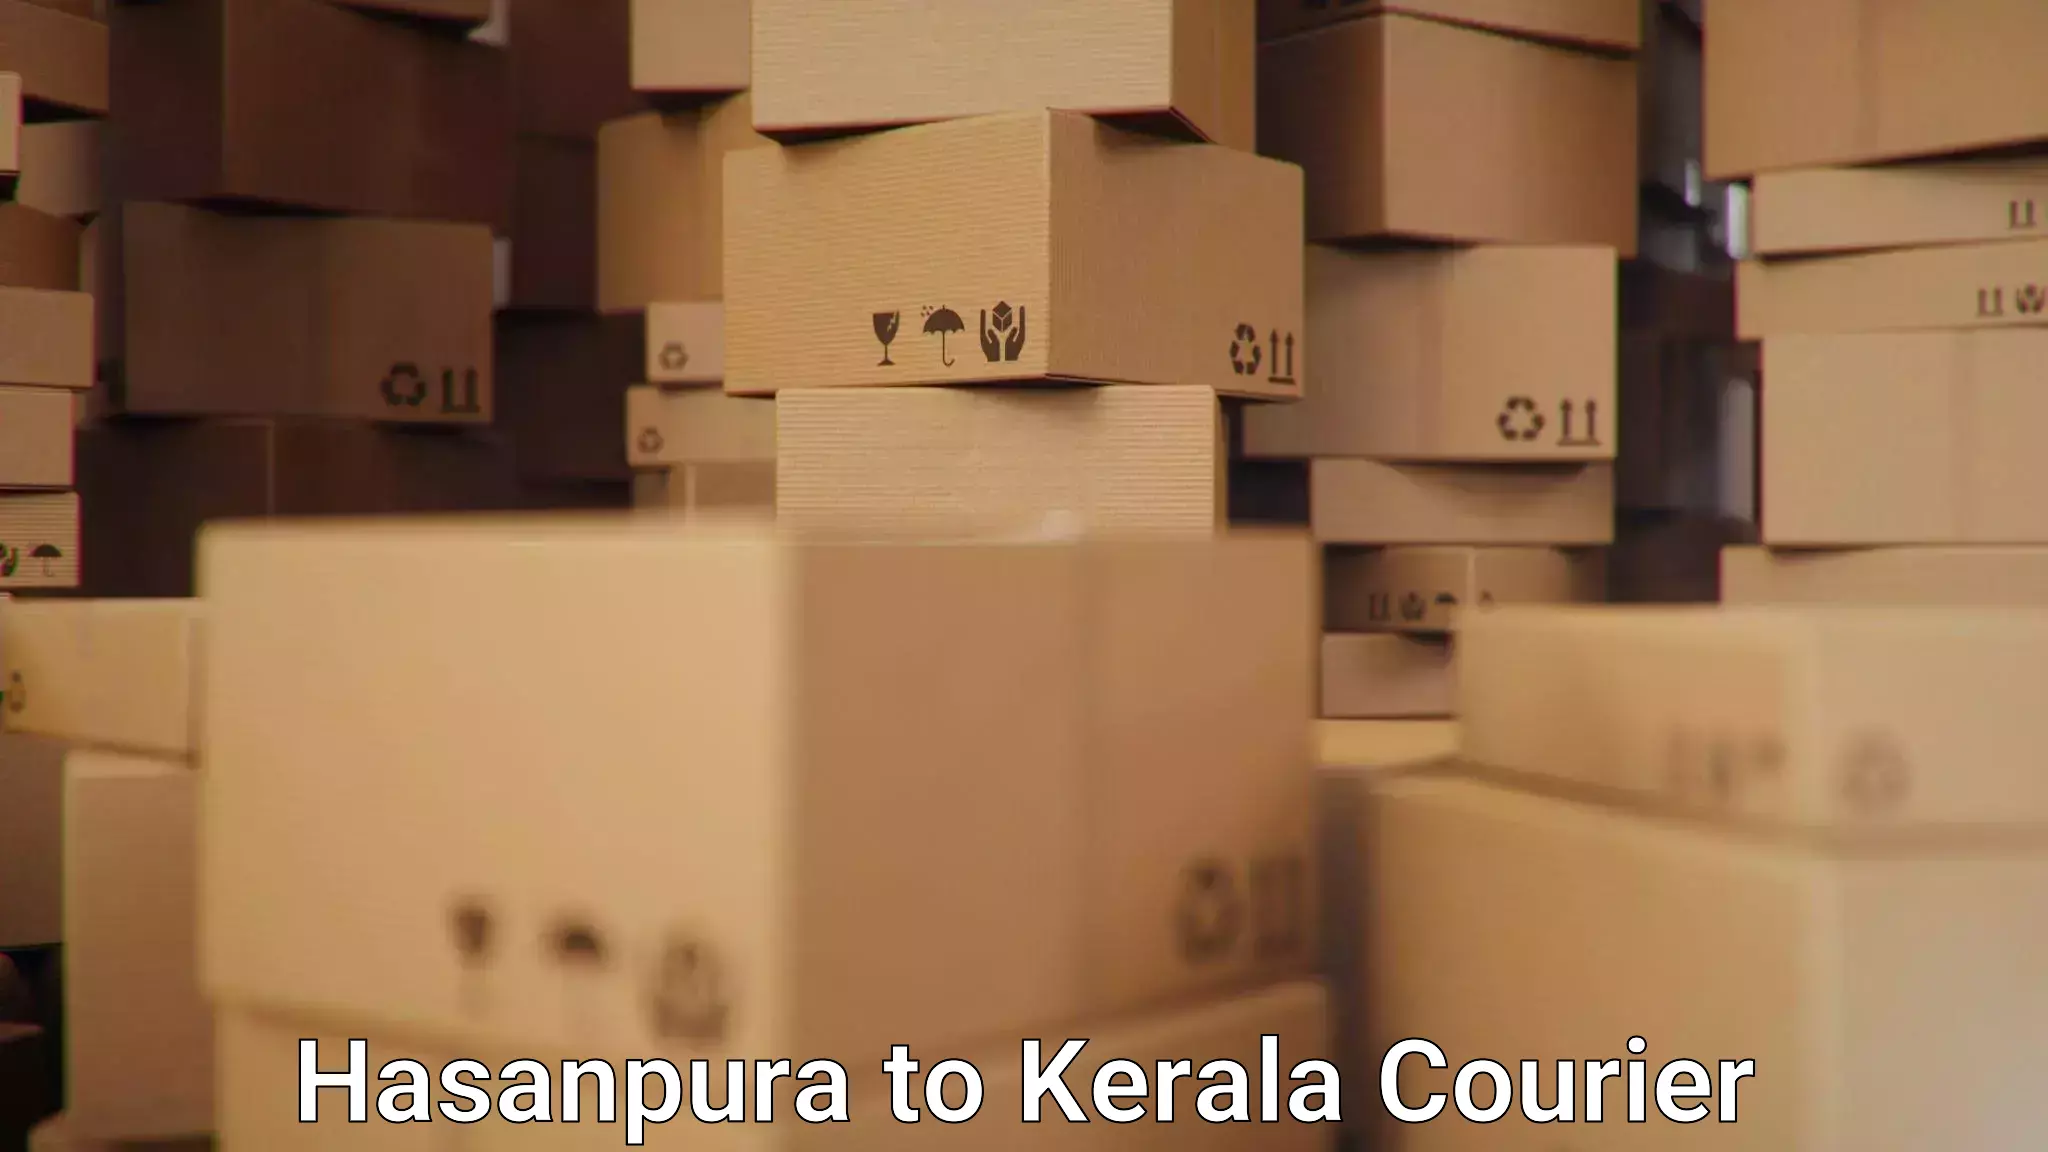 Global logistics network Hasanpura to Kerala